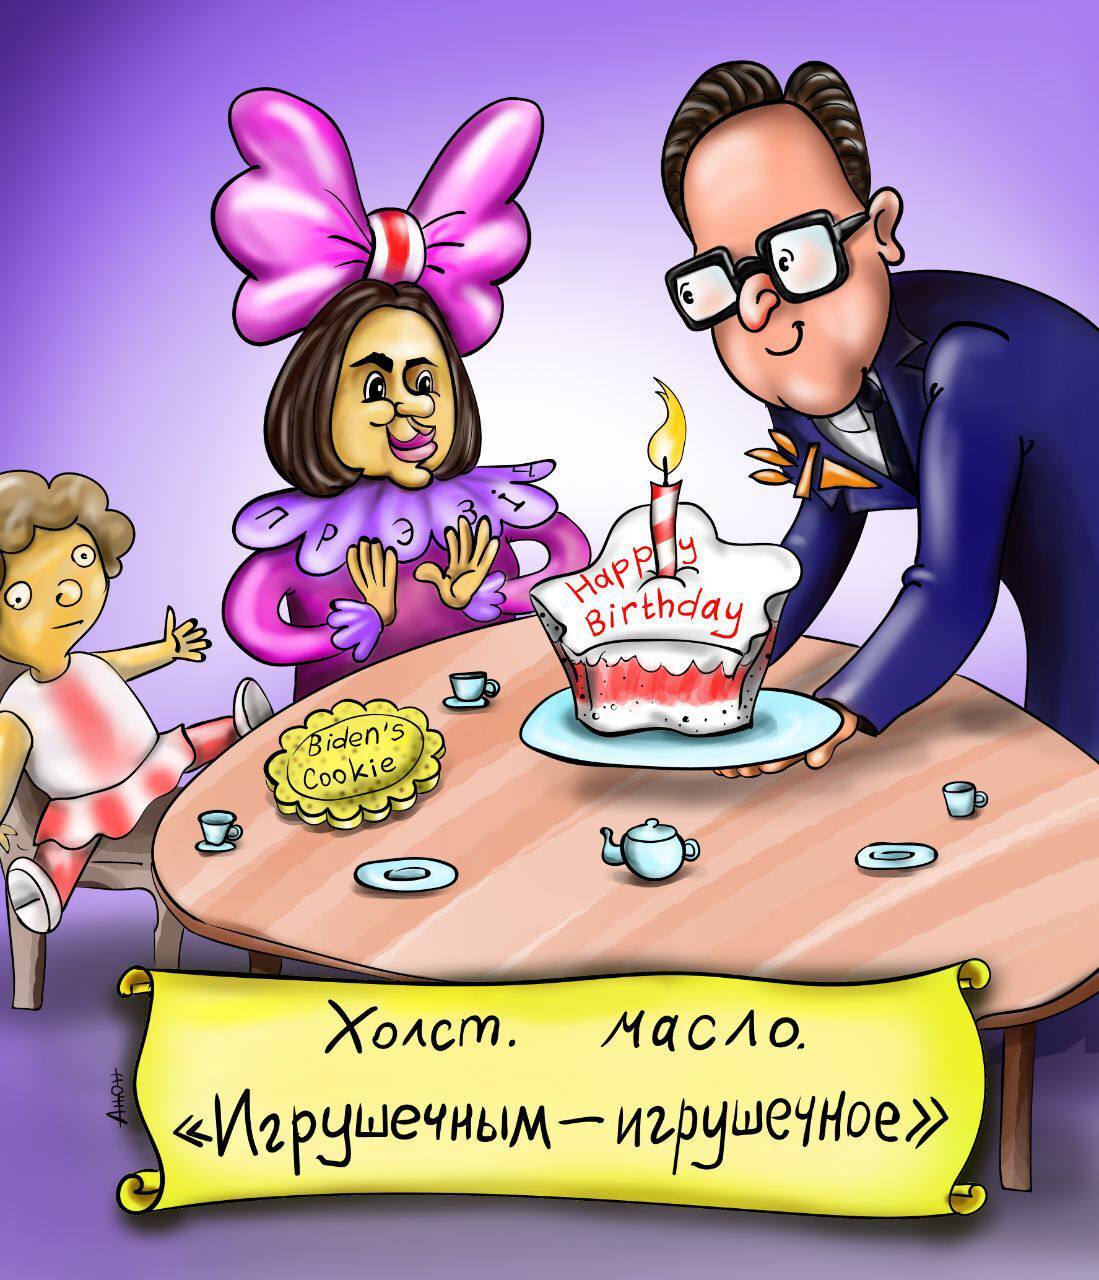 Happy birthday Svetik) - Republic of Belarus, Politics, Birthday, Humor, Caricature